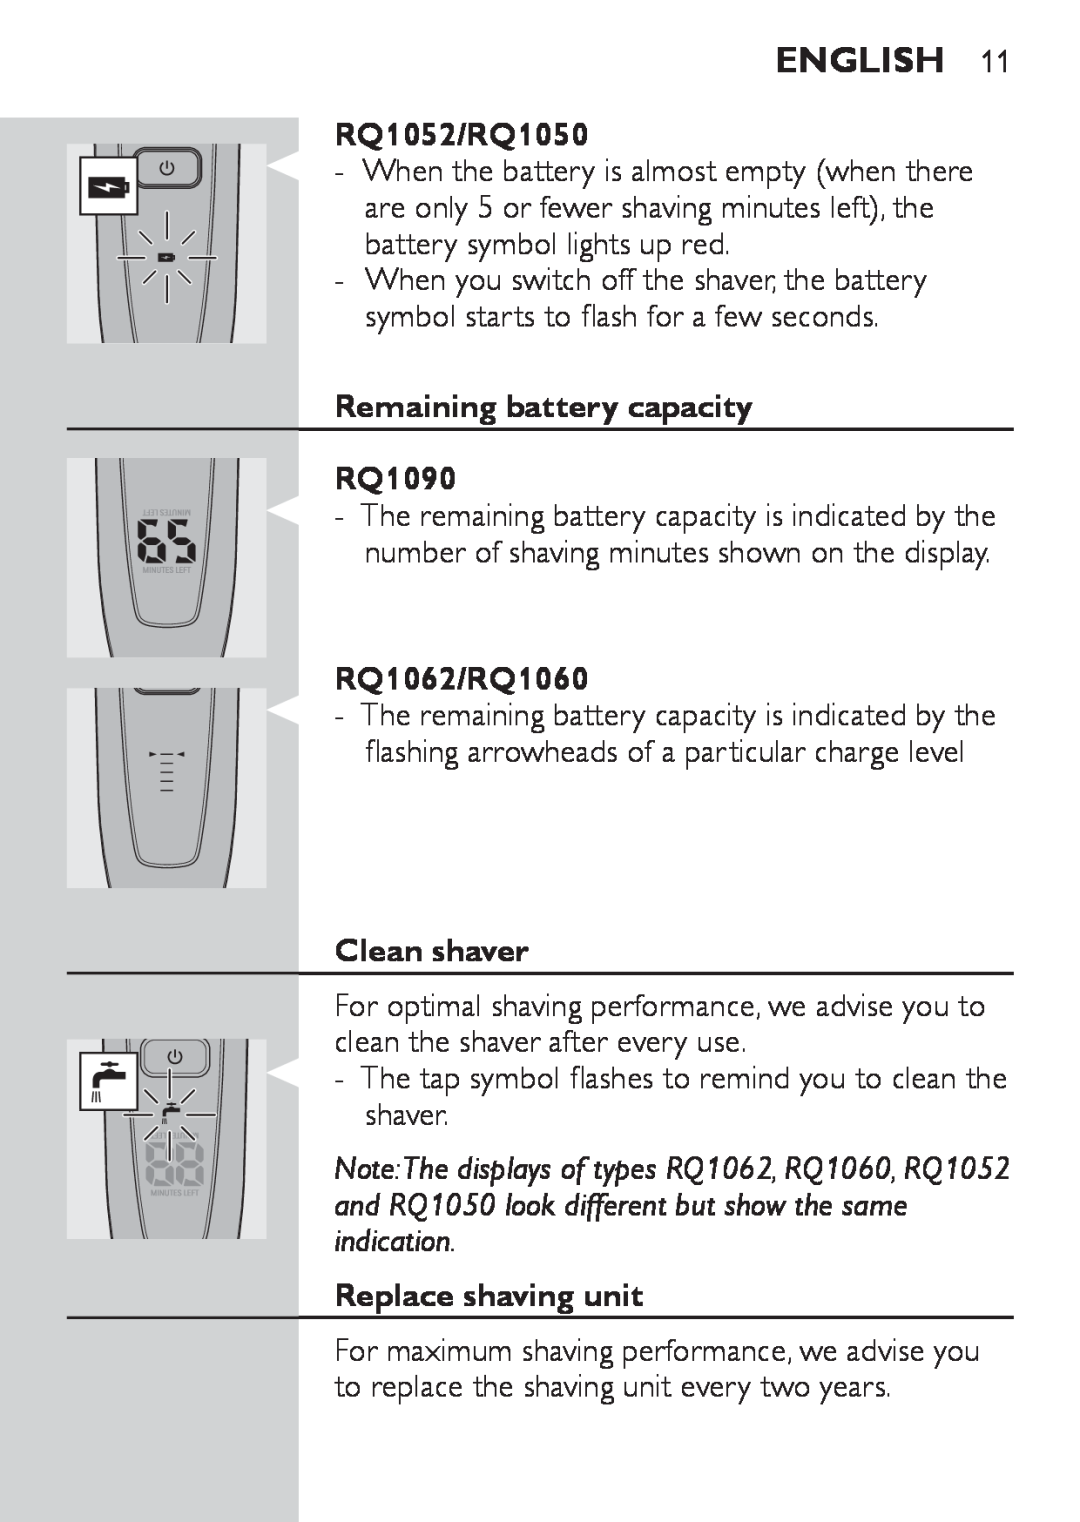 Philips Remaining battery capacity RQ1090, Clean shaver, Replace shaving unit, English, RQ1052/RQ1050, RQ1062/RQ1060 